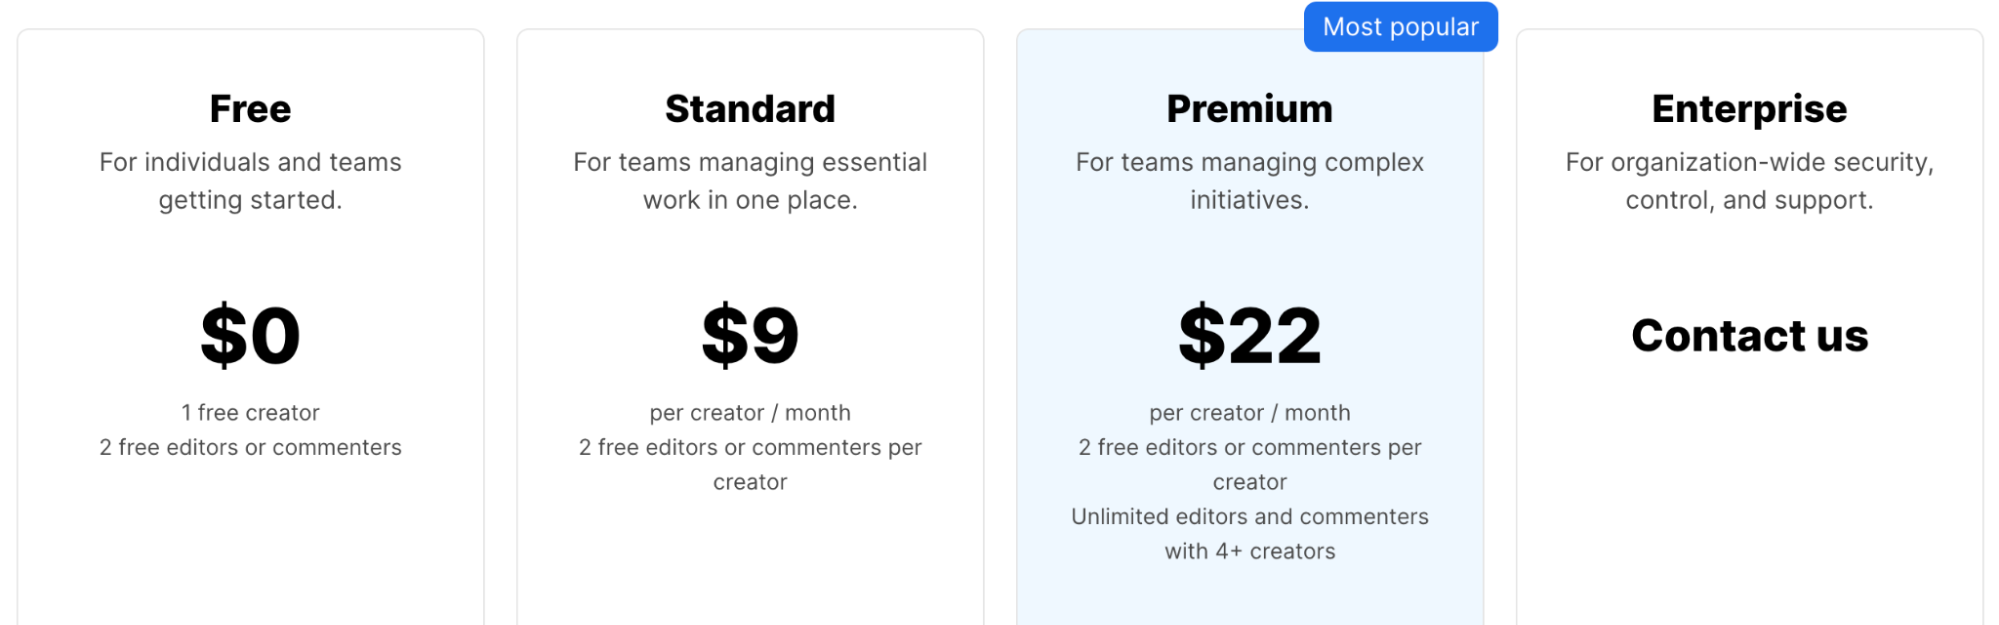 spreadsheets.com pricing